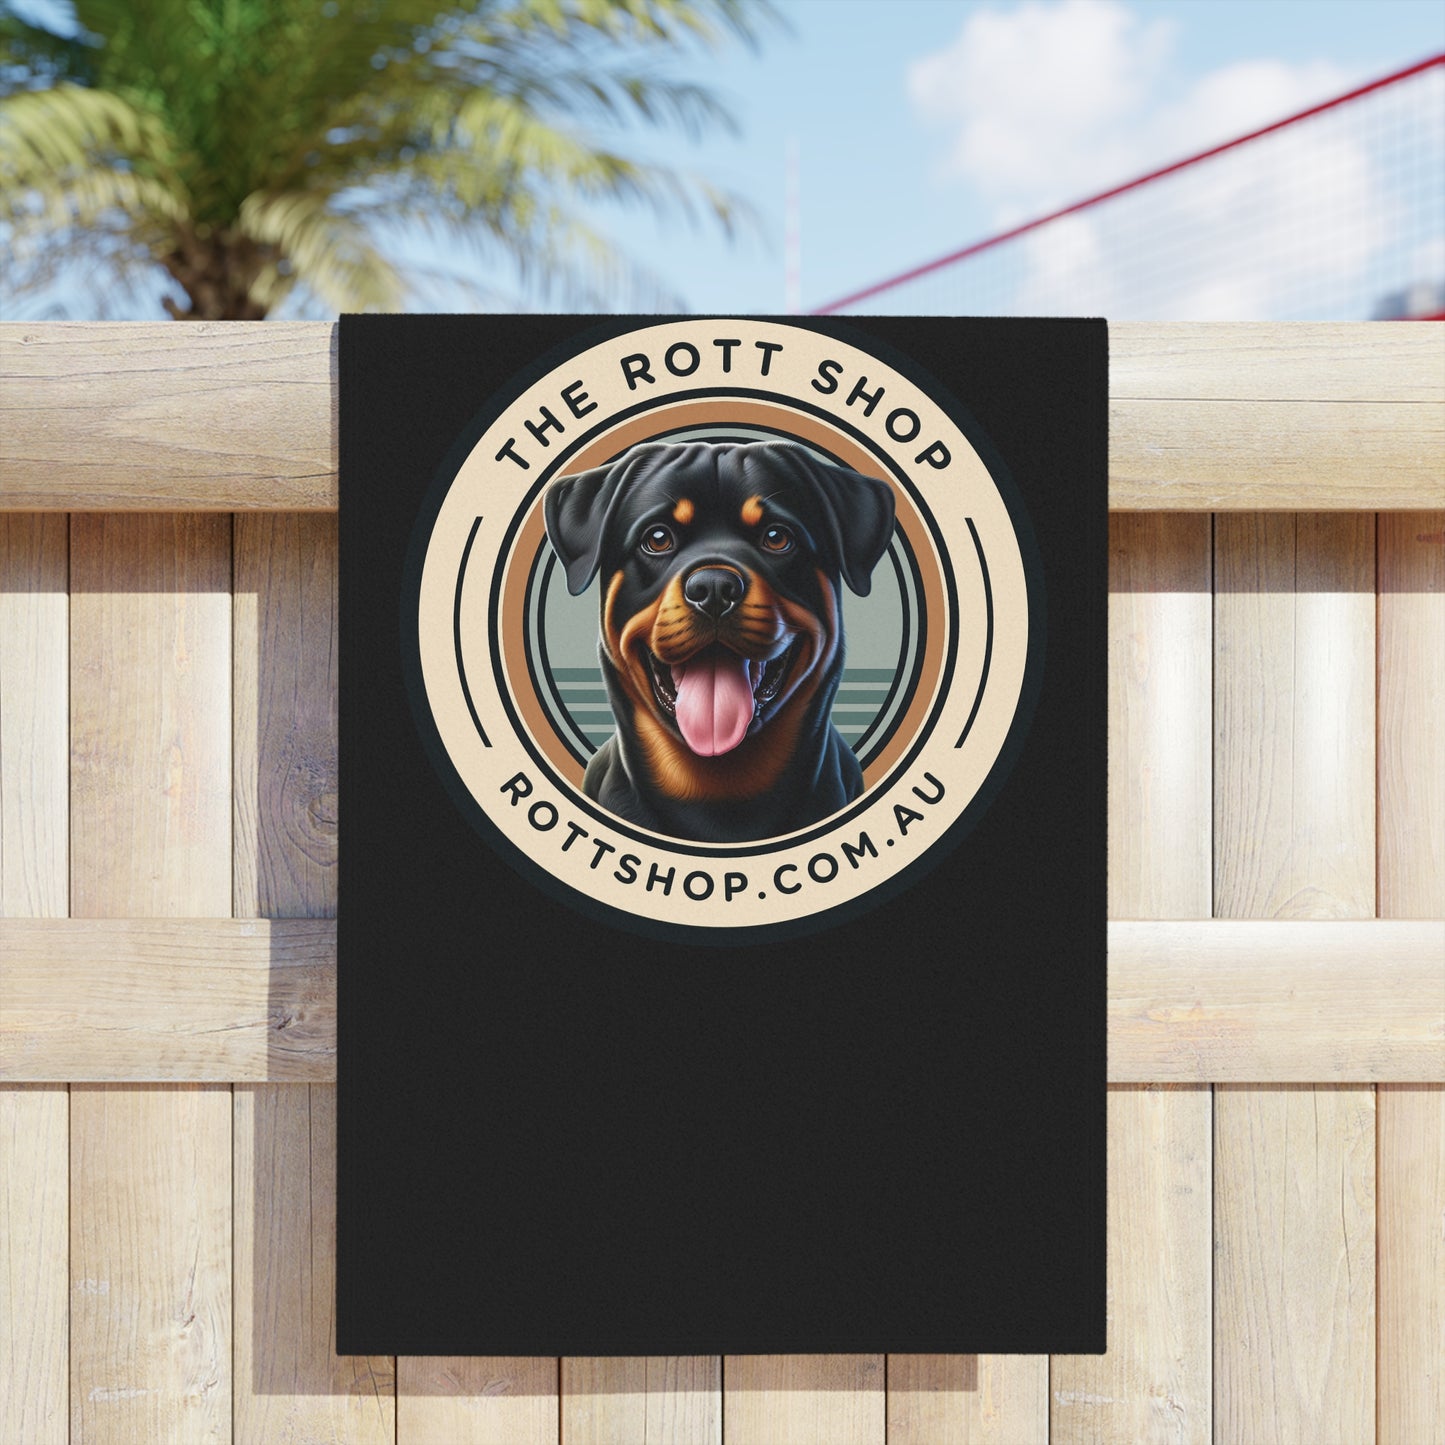 Rott Shop Logo - Beach Towels